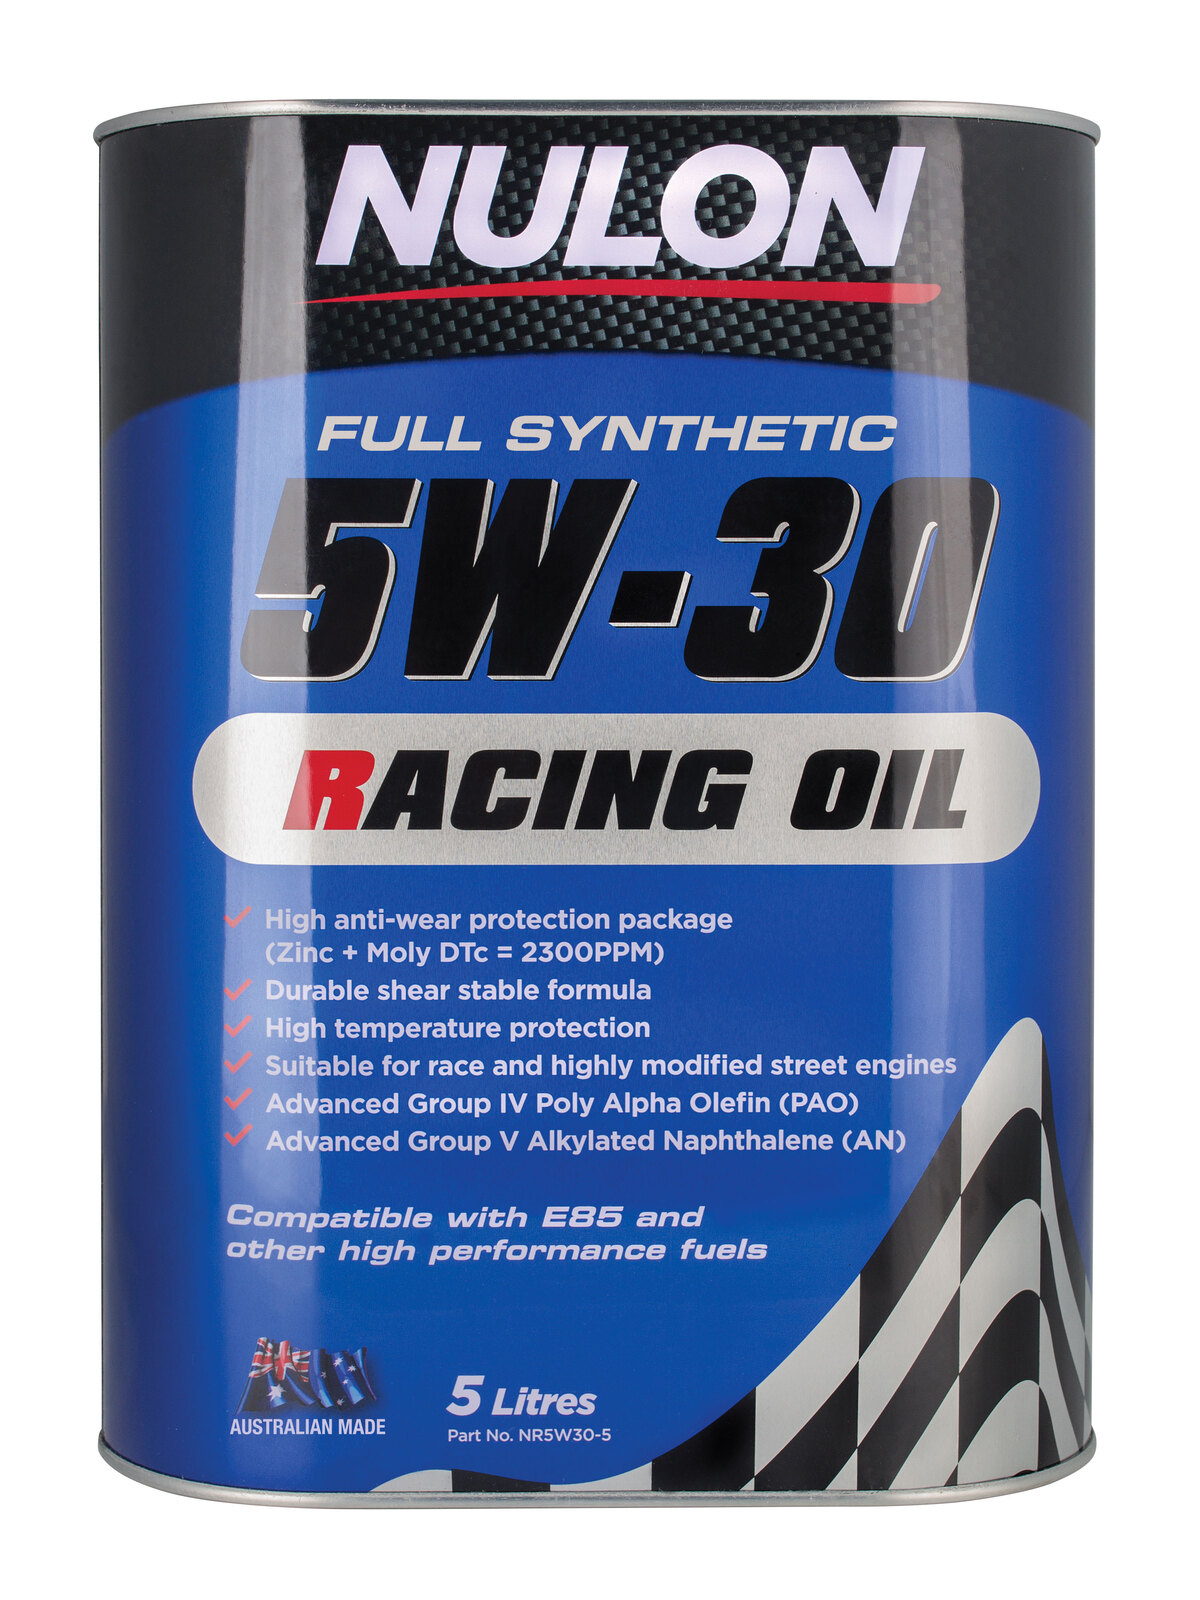 NULON Full Synthetic 5W-30 Racing Oil, Each